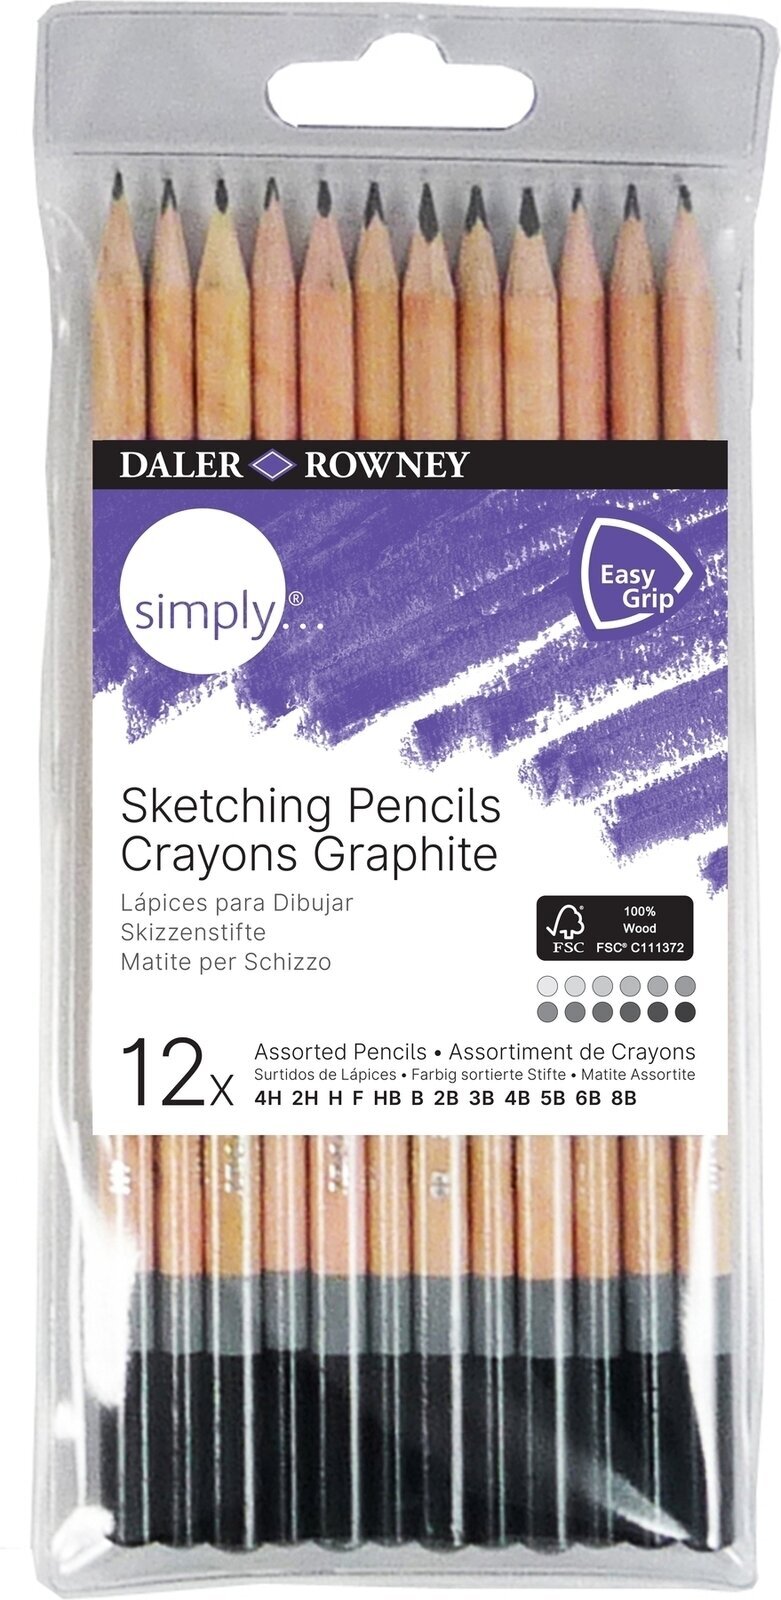 Grafit ceruza Daler Rowney Simply Sketching Pencils Művész ceruza készlet 12 db